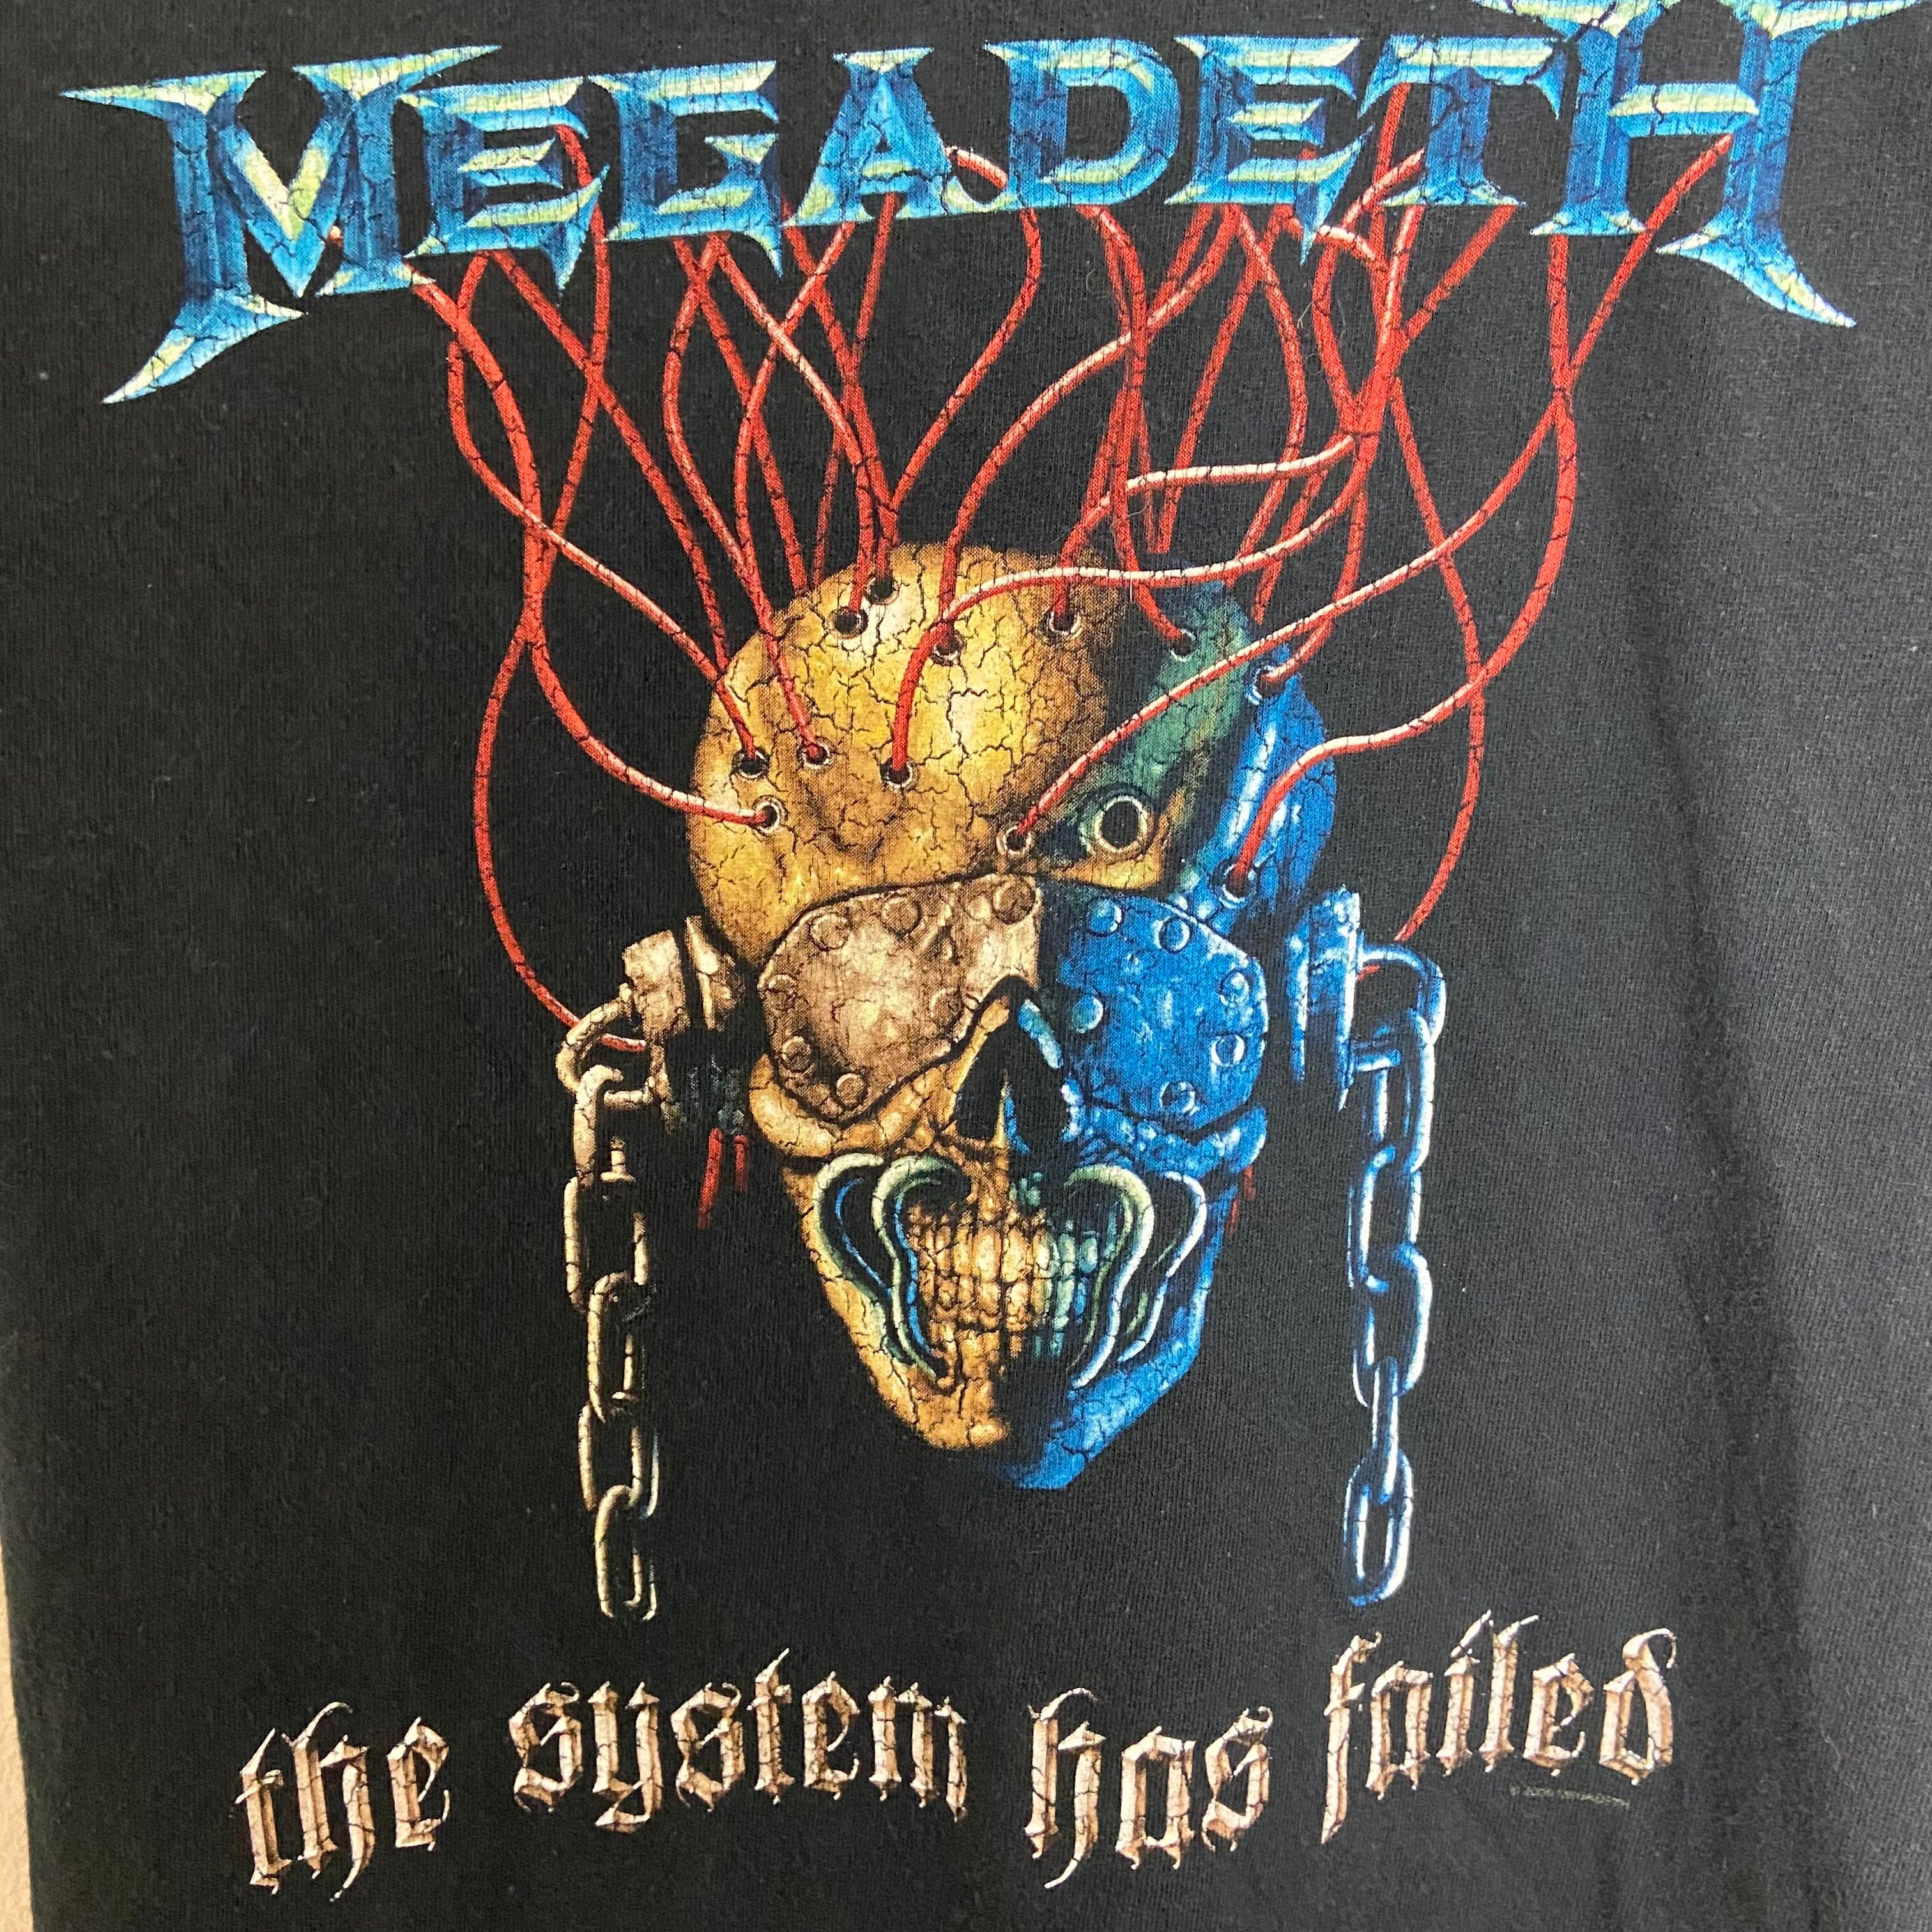 Vintage 2009 Megadeth The System Has Failed Tee Size US S / EU 44-46 / 1 - 3 Thumbnail